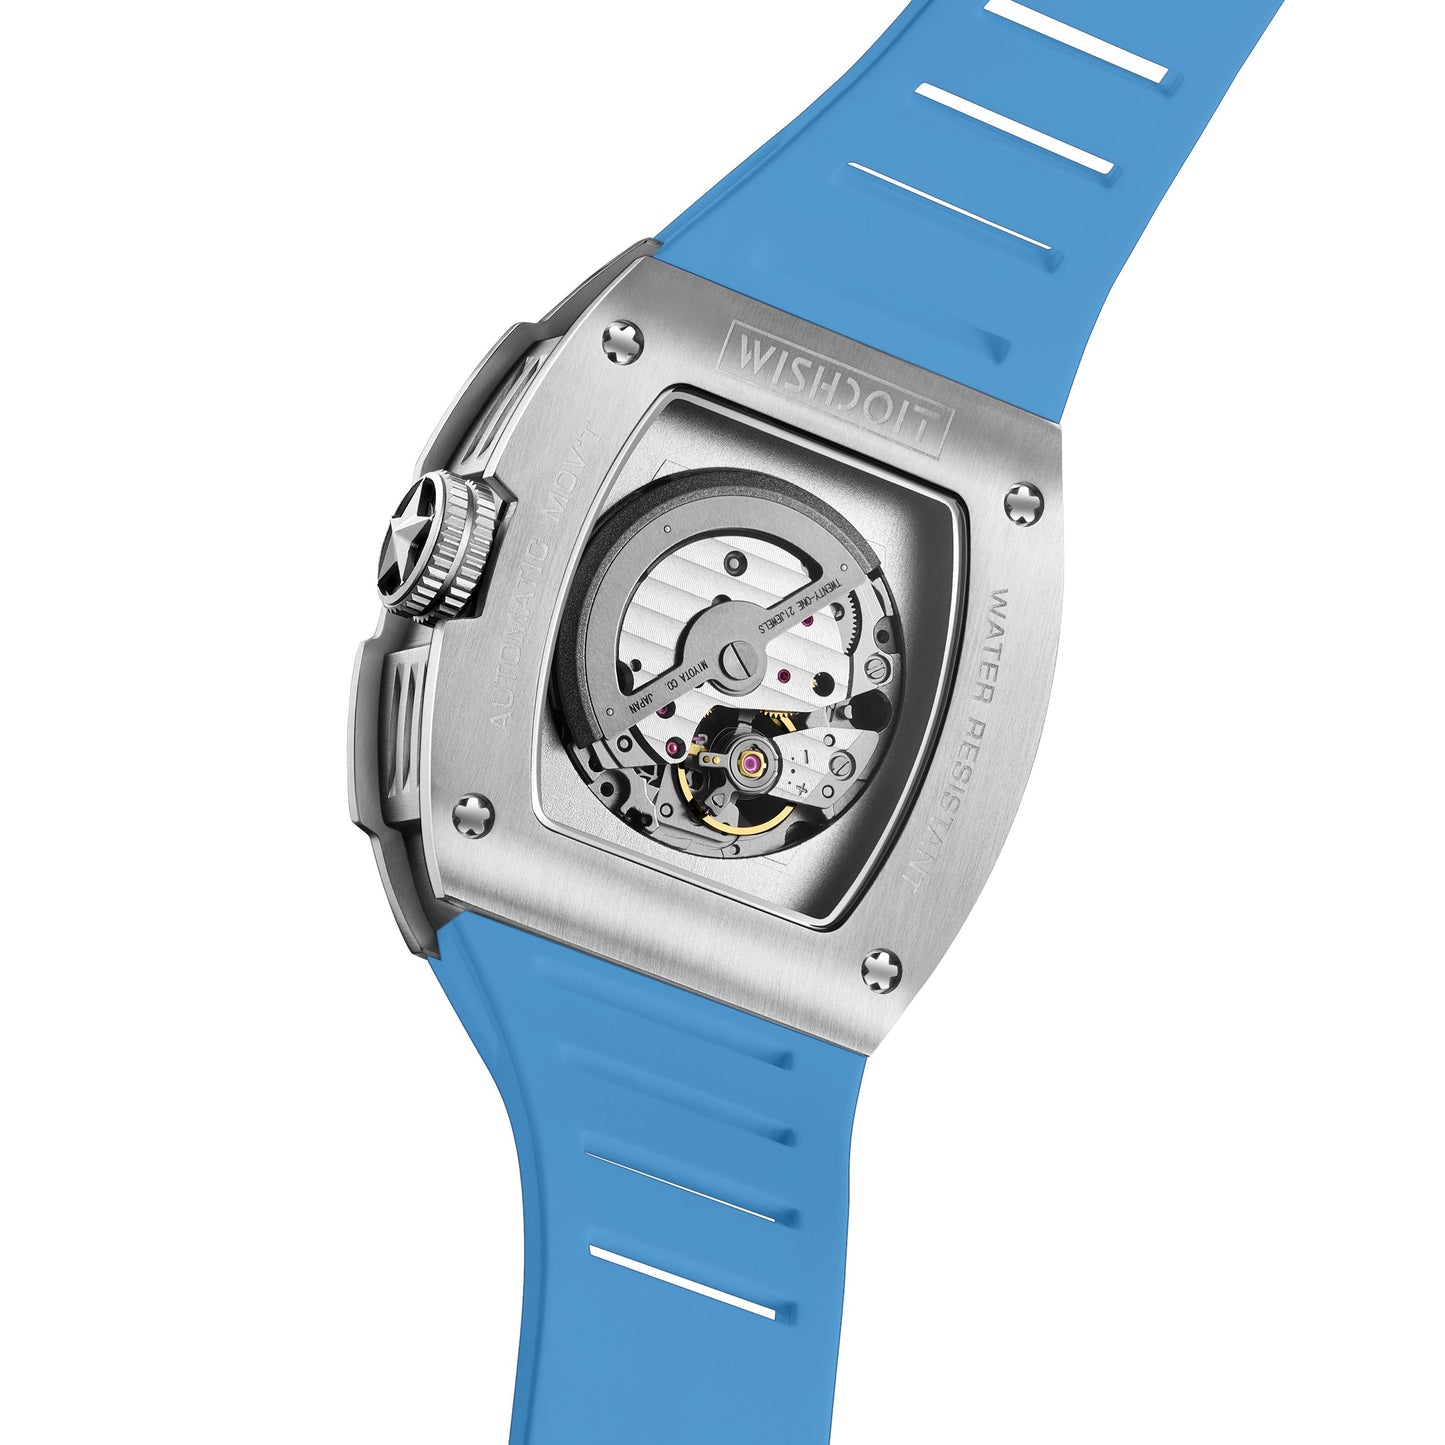 wishdoit-watches-full-speed-mechanical-watches-for-men-silvery-light-blue